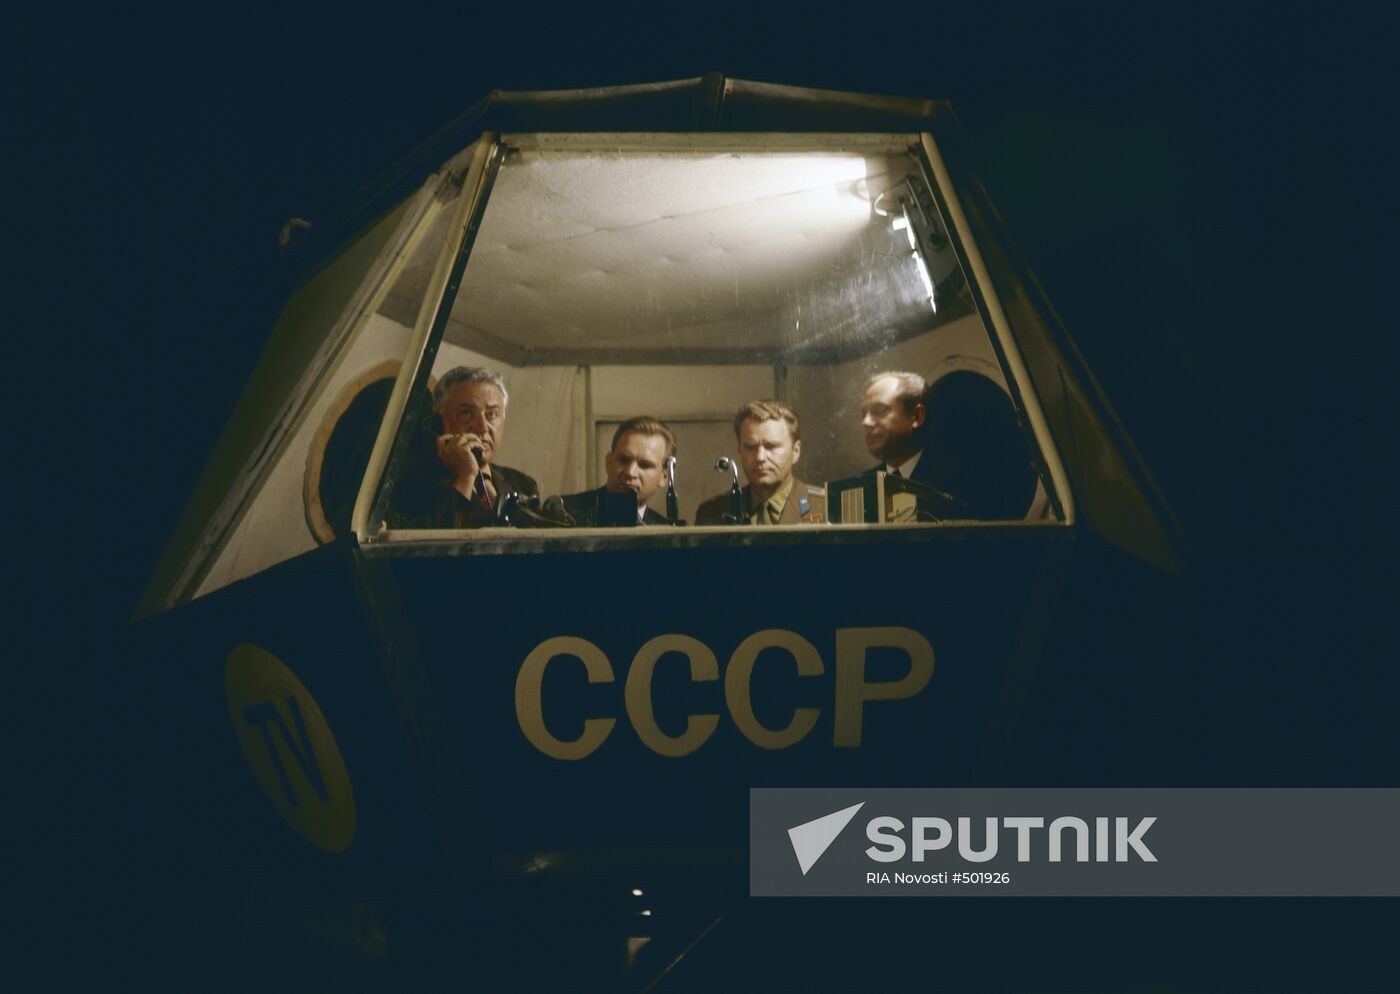 CT commentator Yury Fokin with cosmonauts Valery Kubasov and Vladimir Shatalov reports from space center